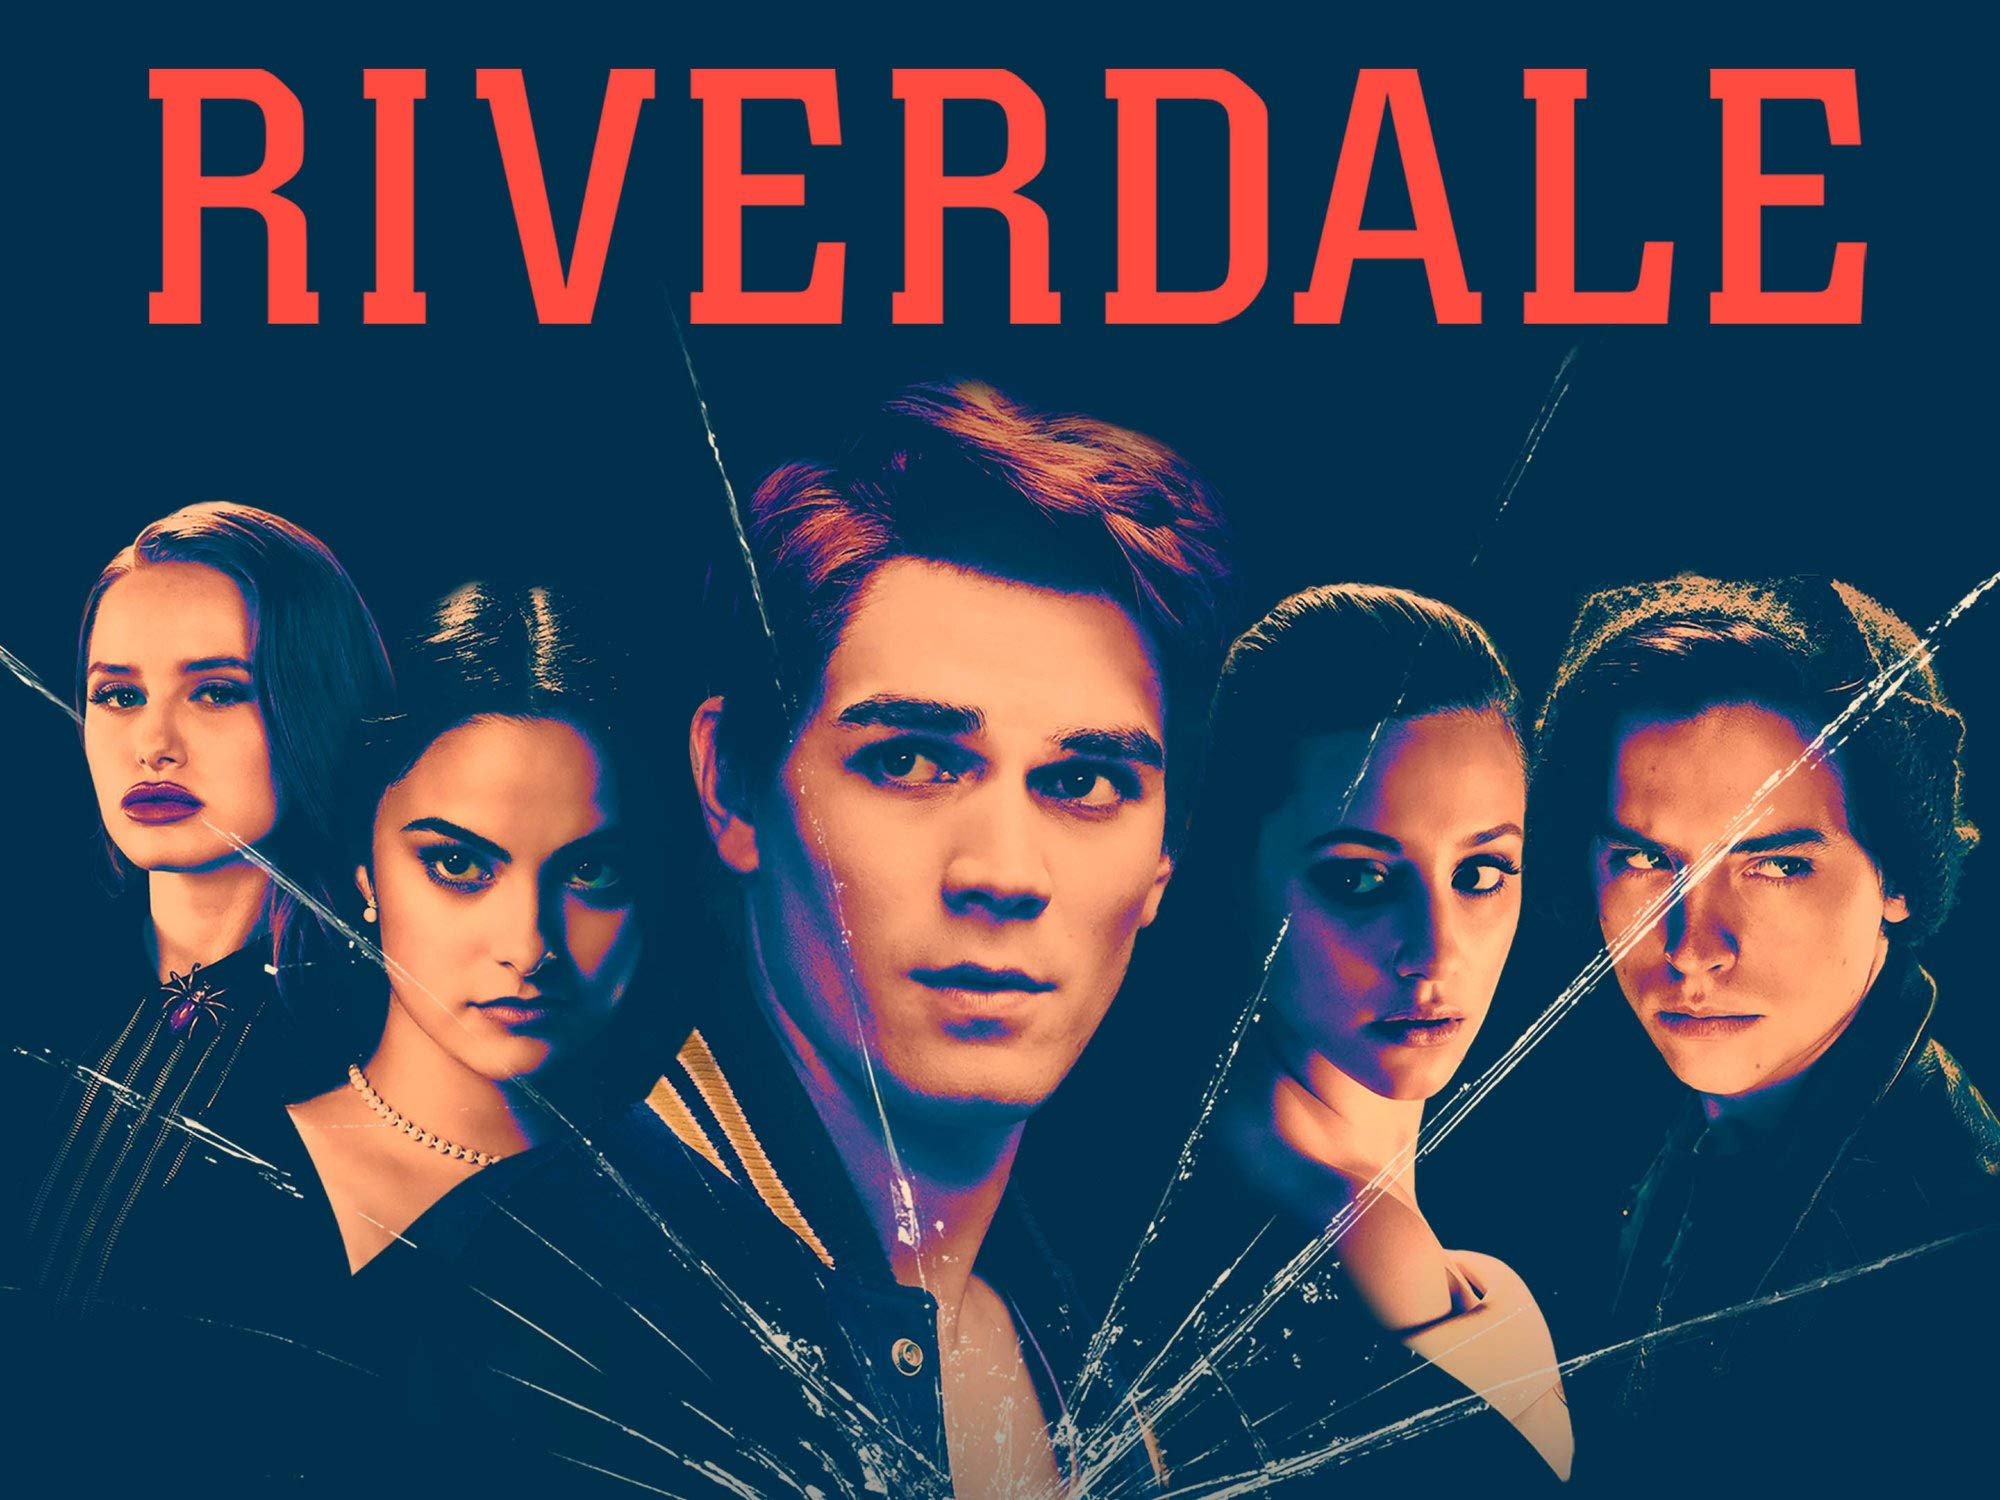 Riverdale Season 2 Cast Wallpapers